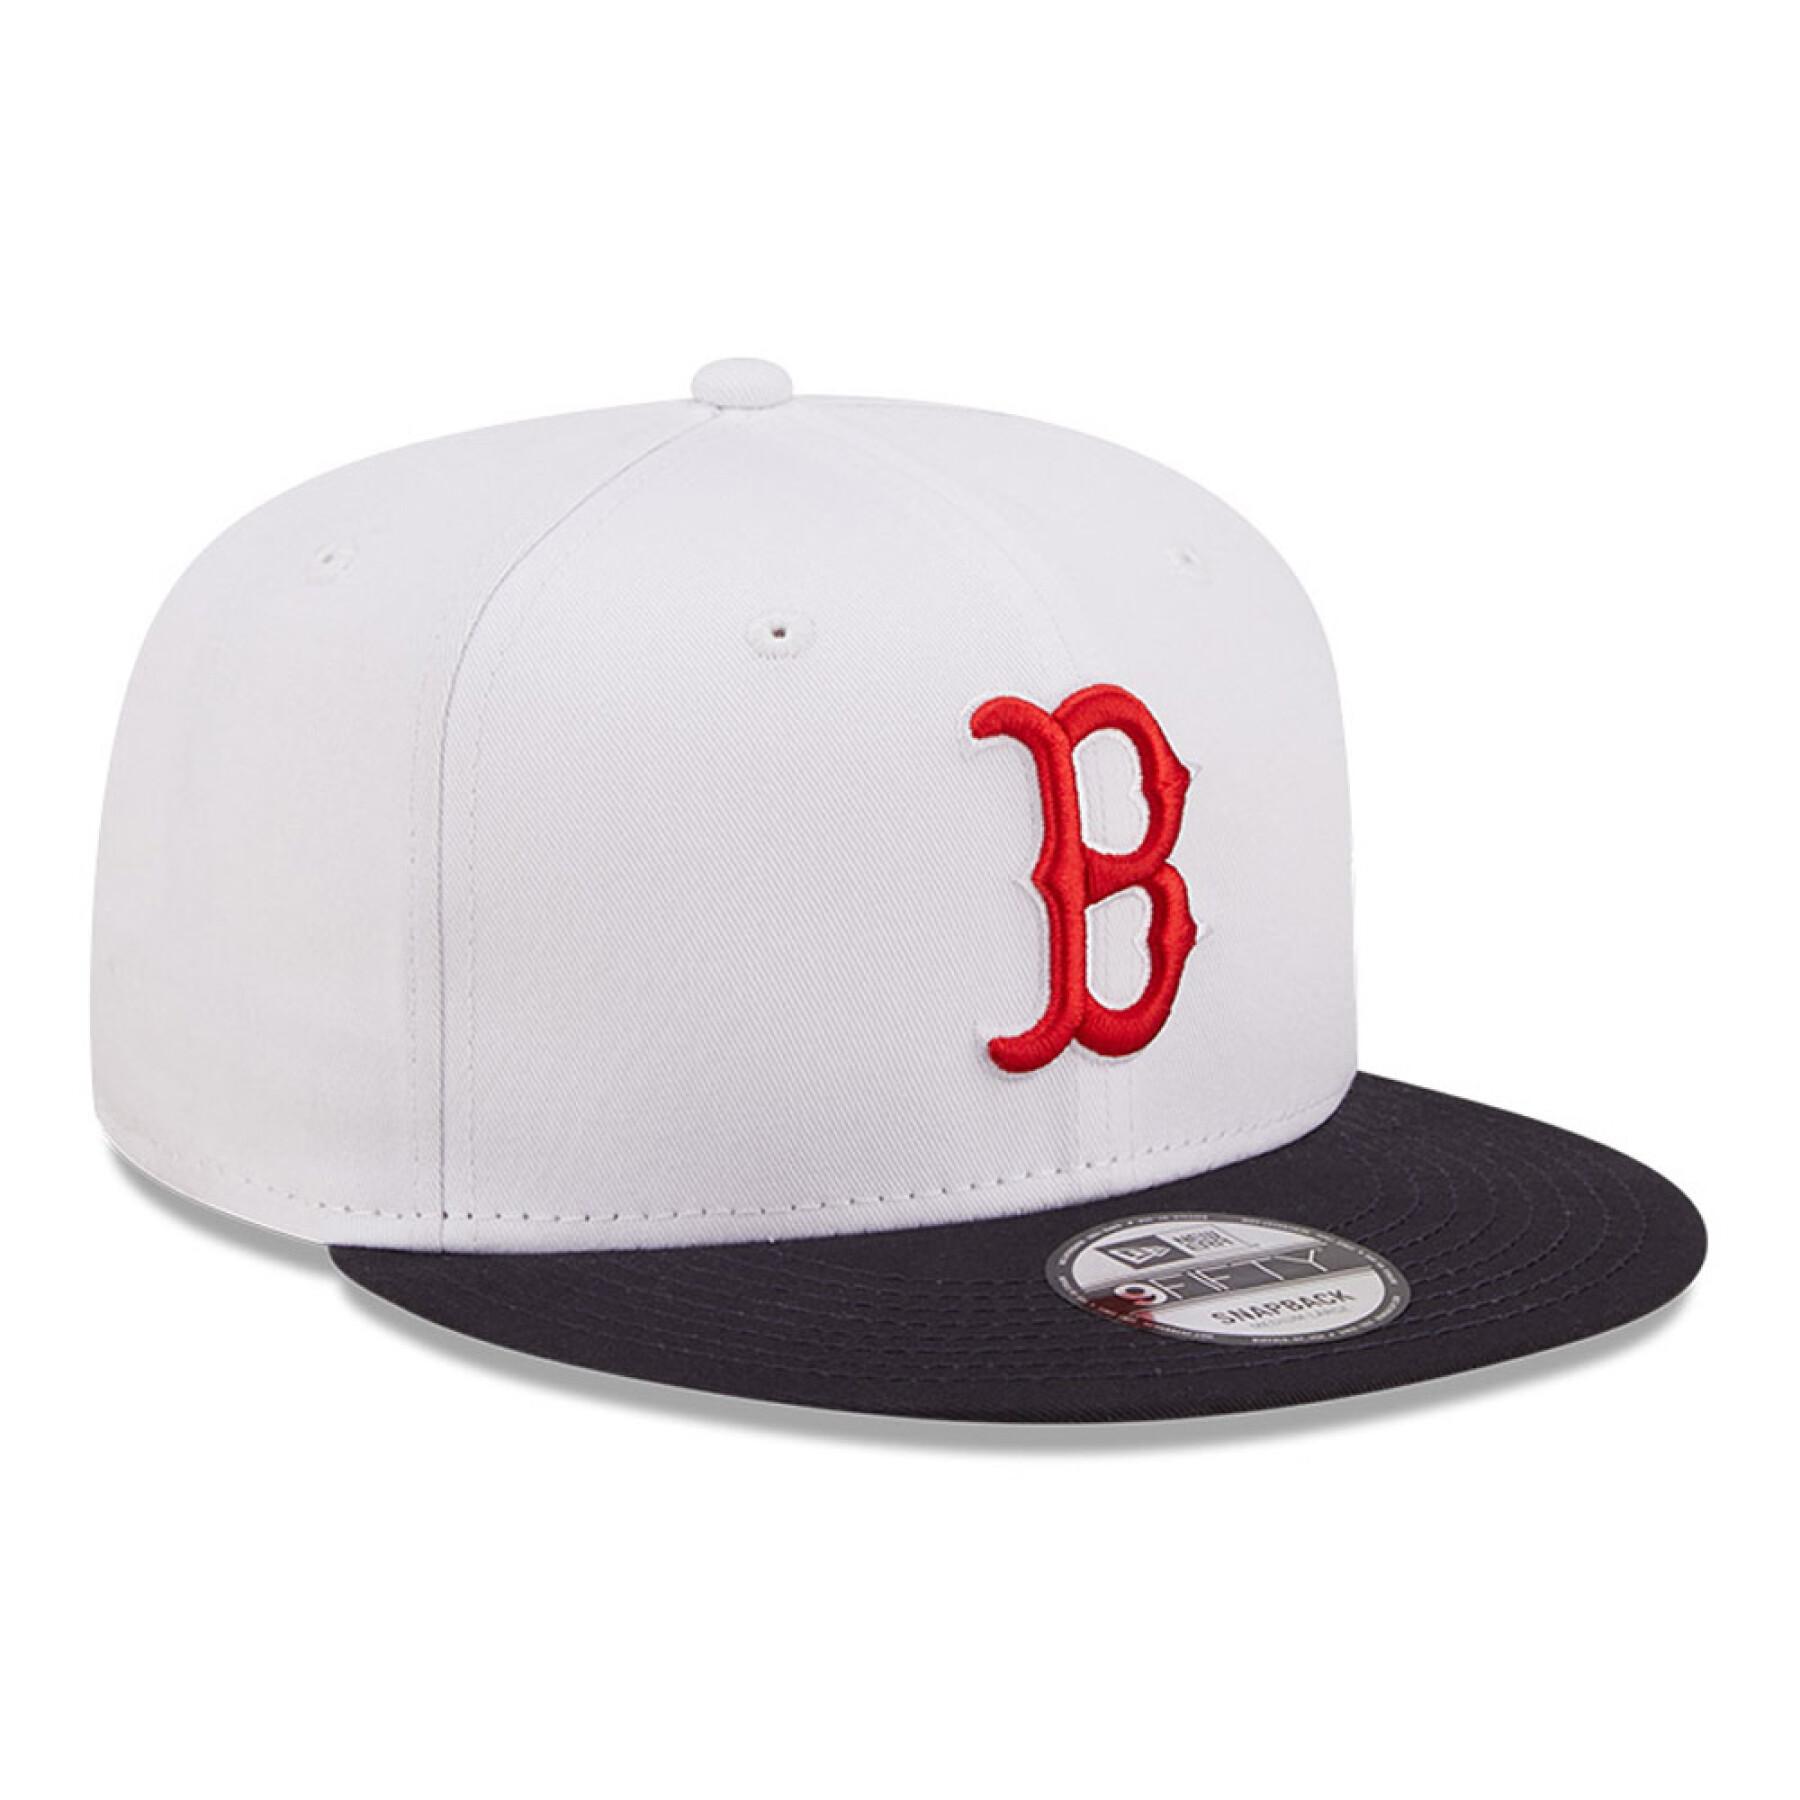 9fifty pet New Era Boston Red Sox